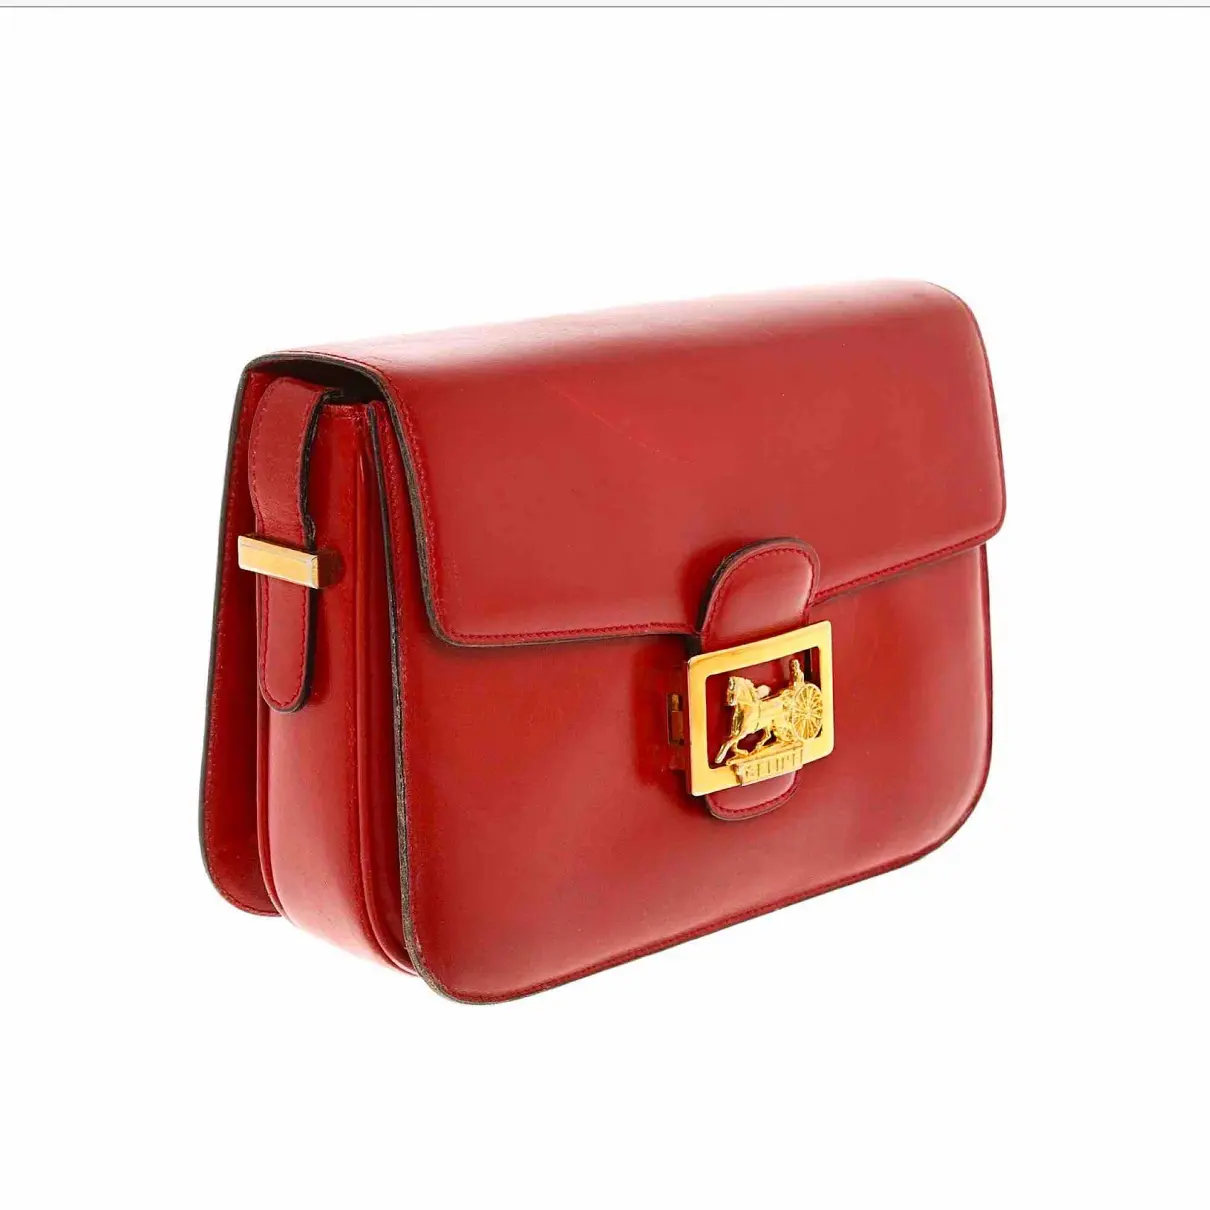 Buy Celine Triomphe Vintage leather crossbody bag online